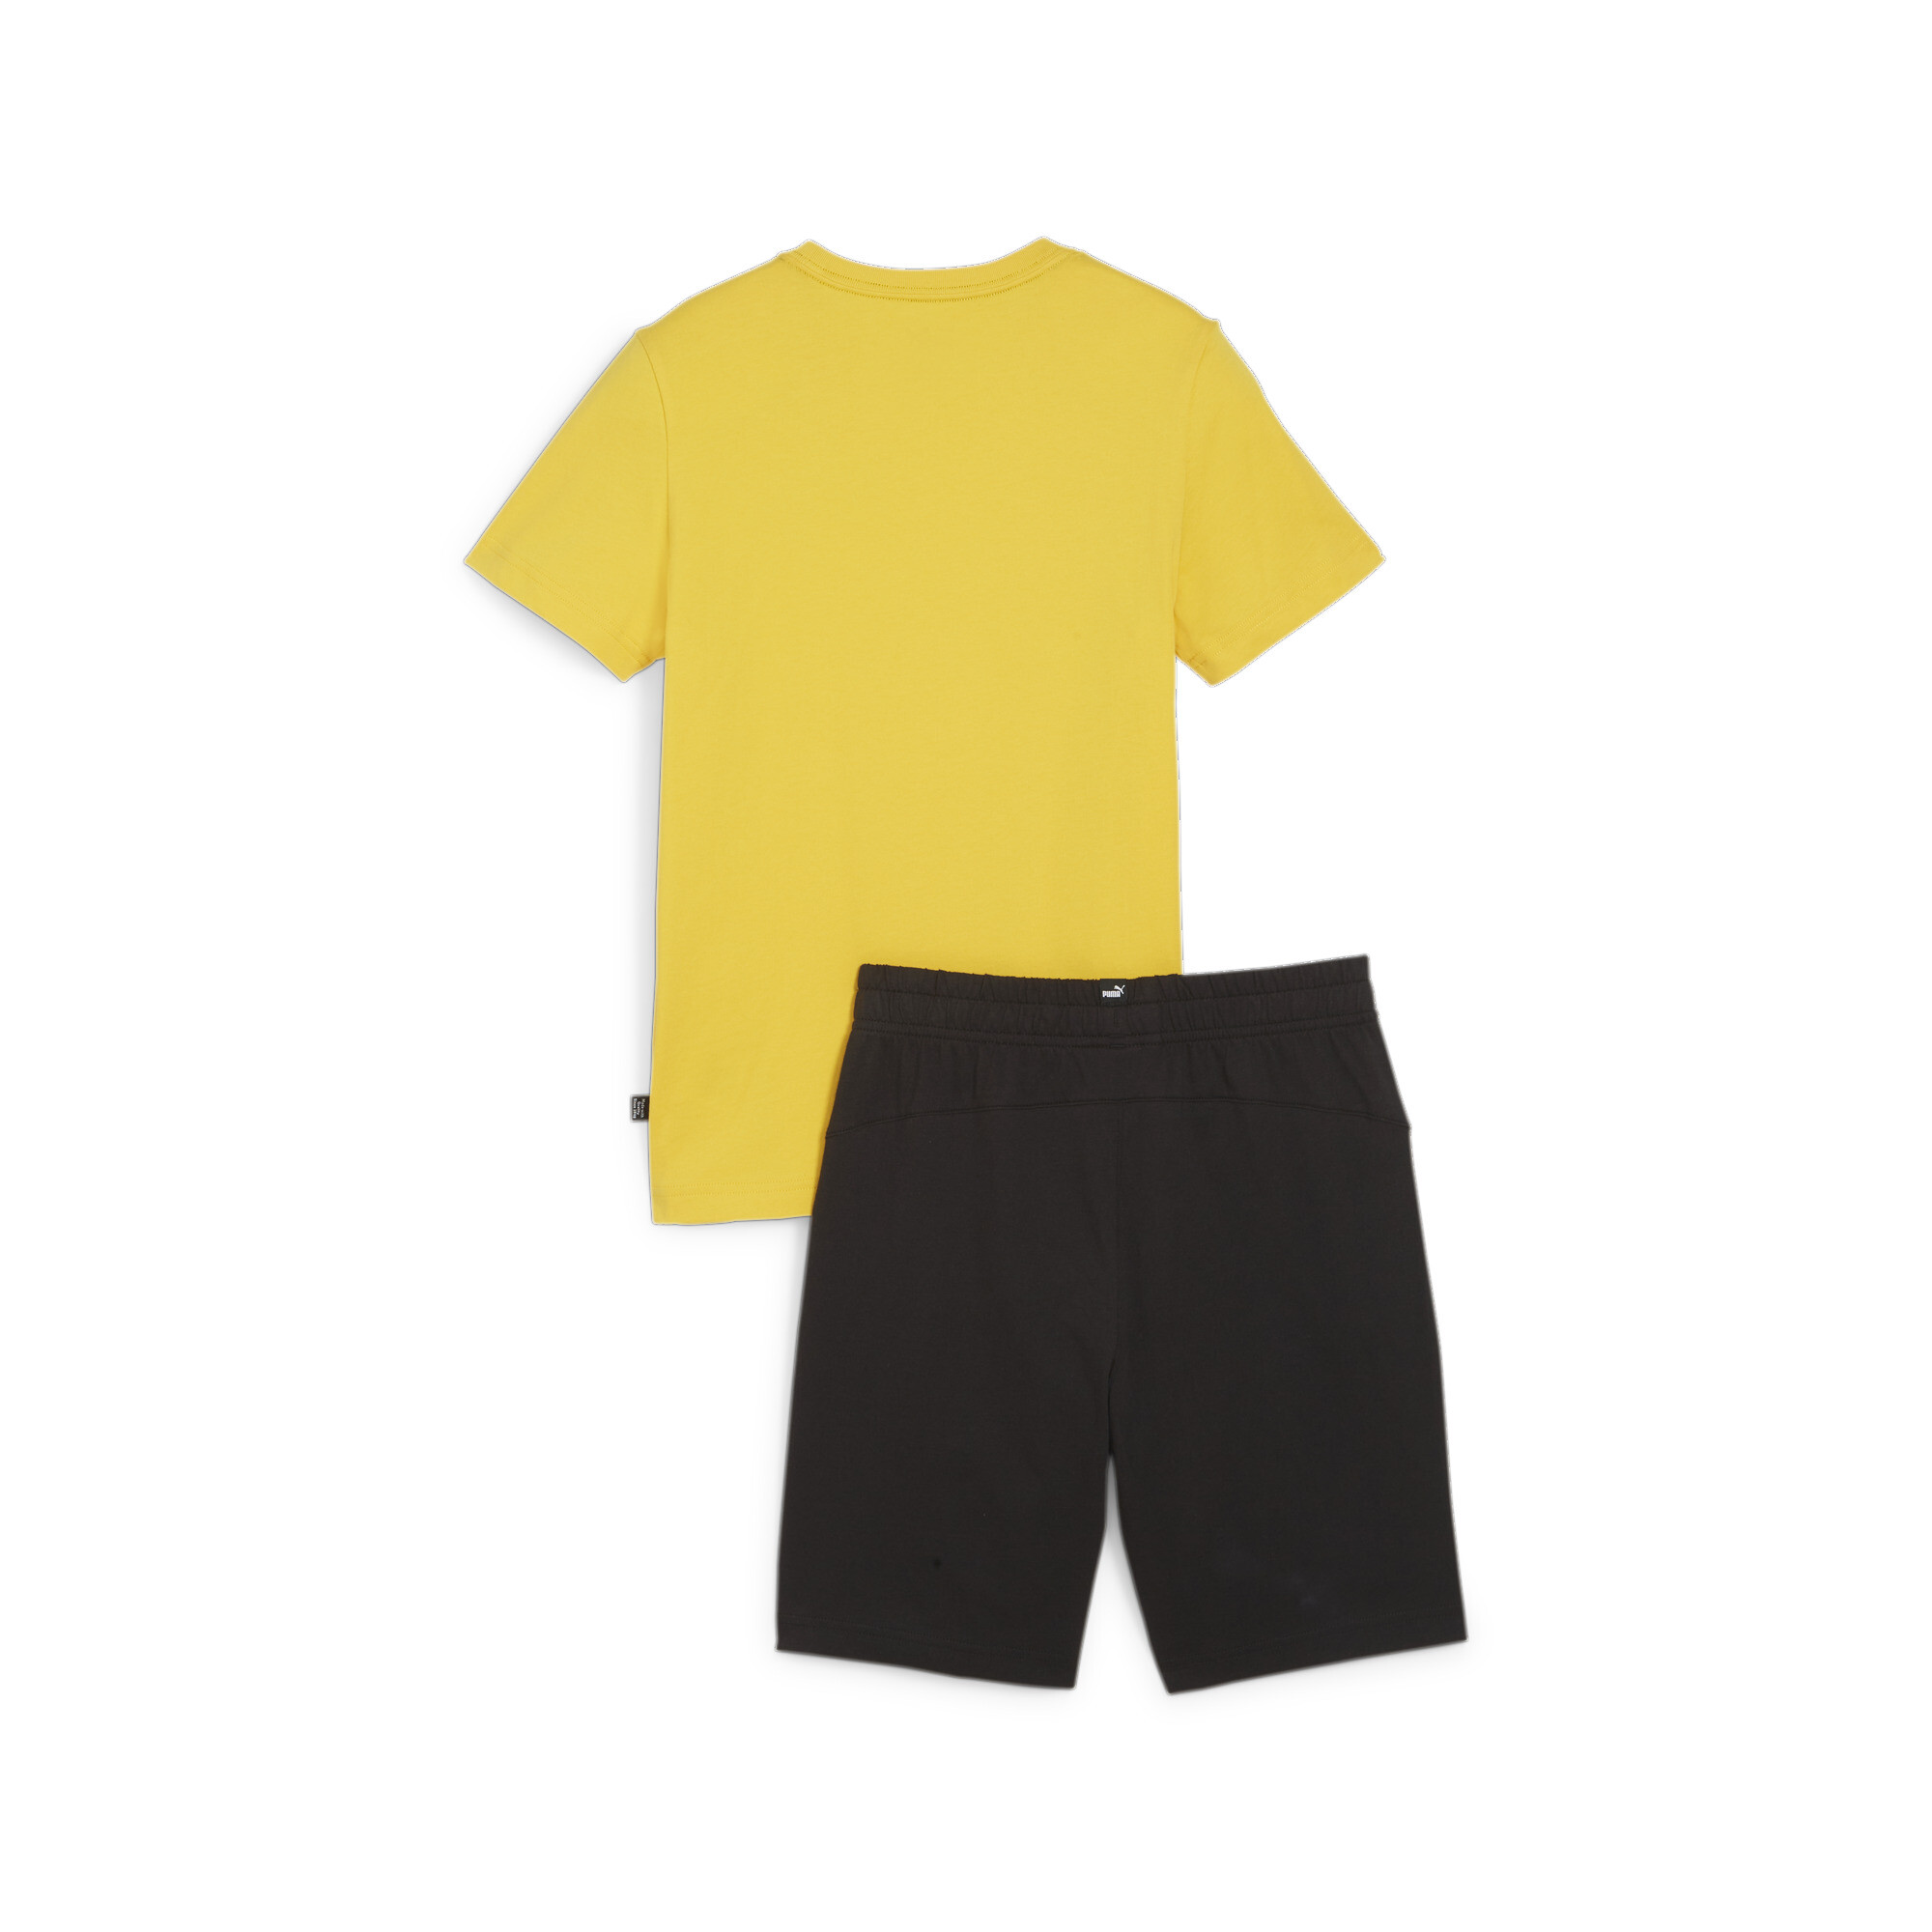 Men's Puma Jersey Youth Shorts Set, Yellow, Size 15-16Y, Clothing